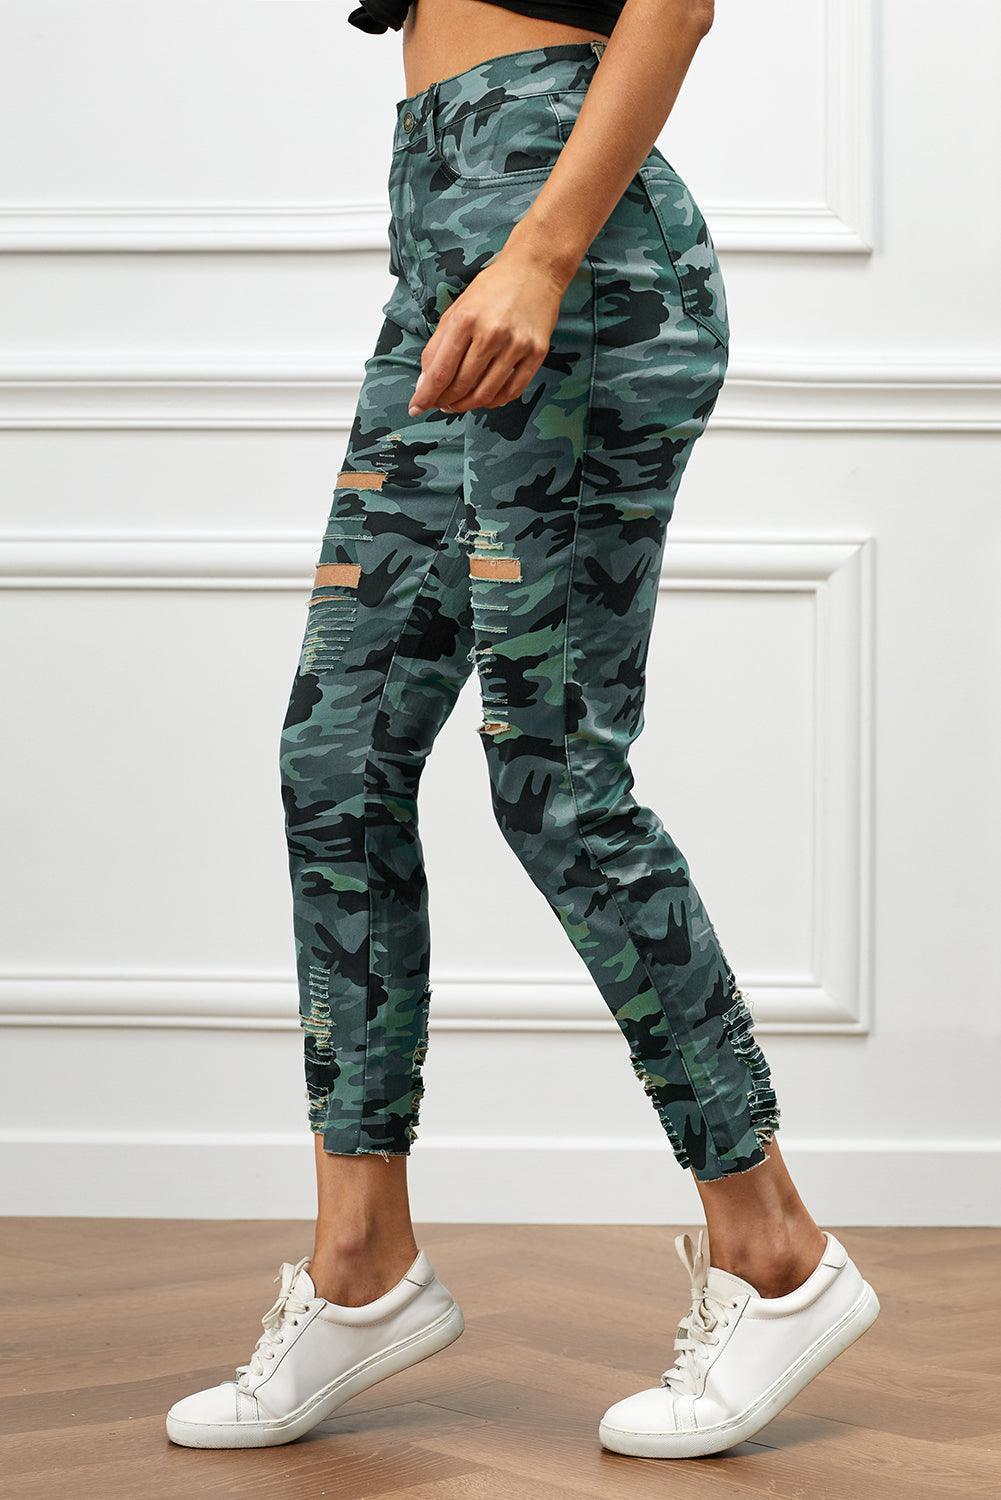 Brave Camouflage Distressed High Rise Skinny Jeans - MXSTUDIO.COM